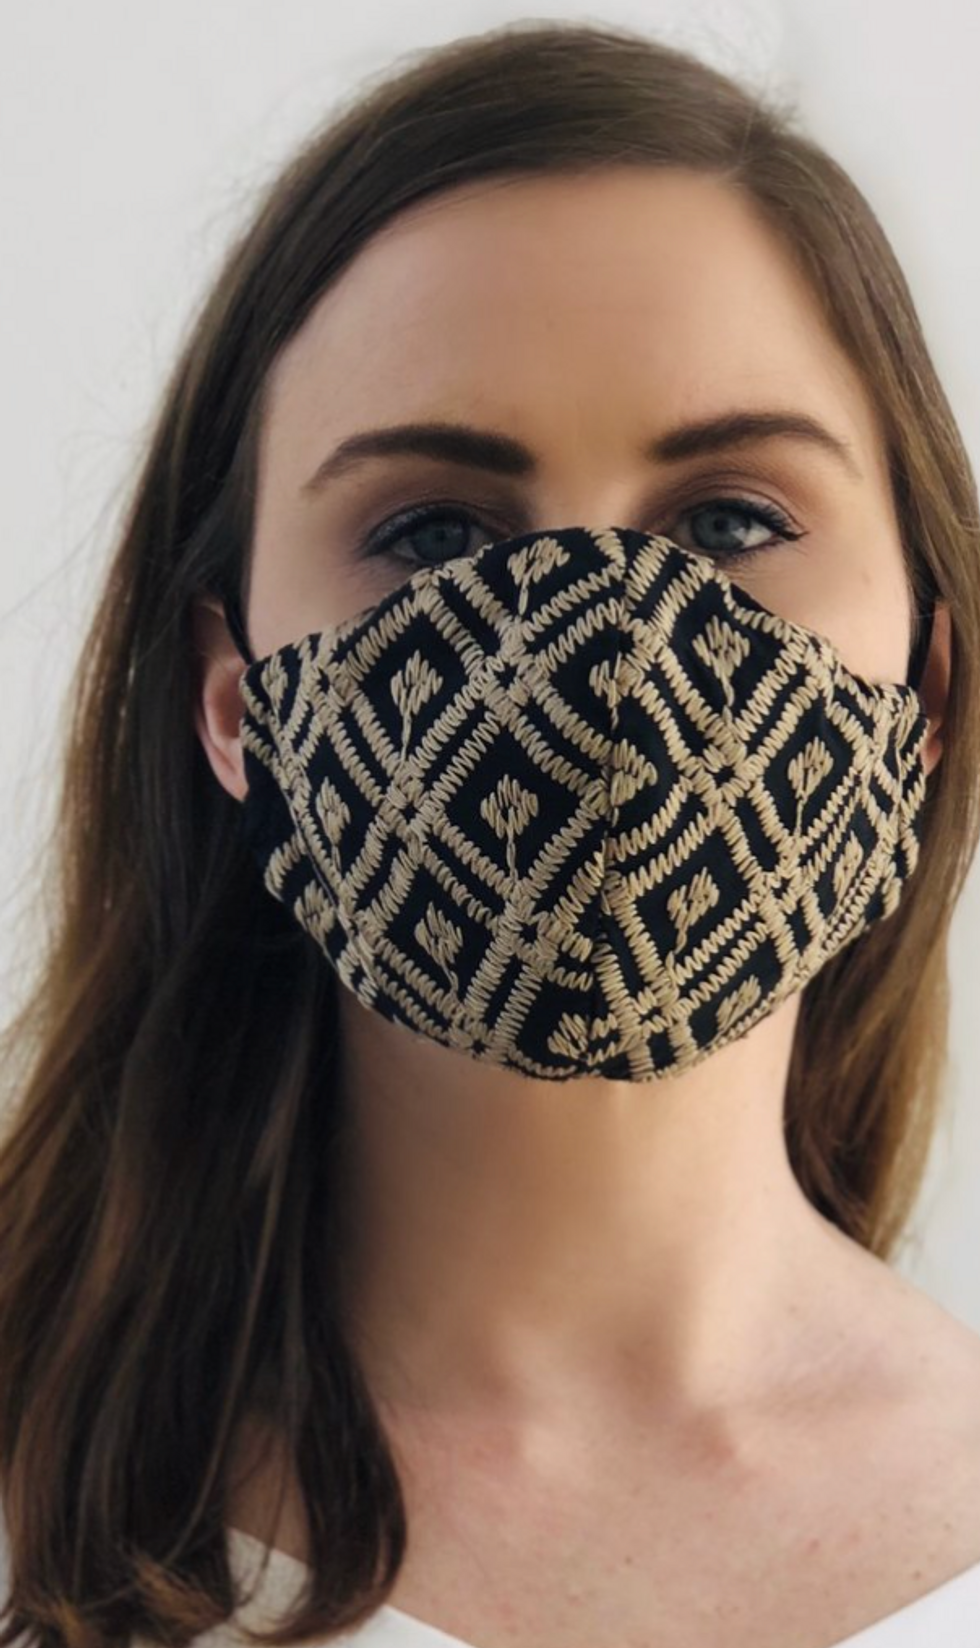 Designer Chloe Dao makes masks